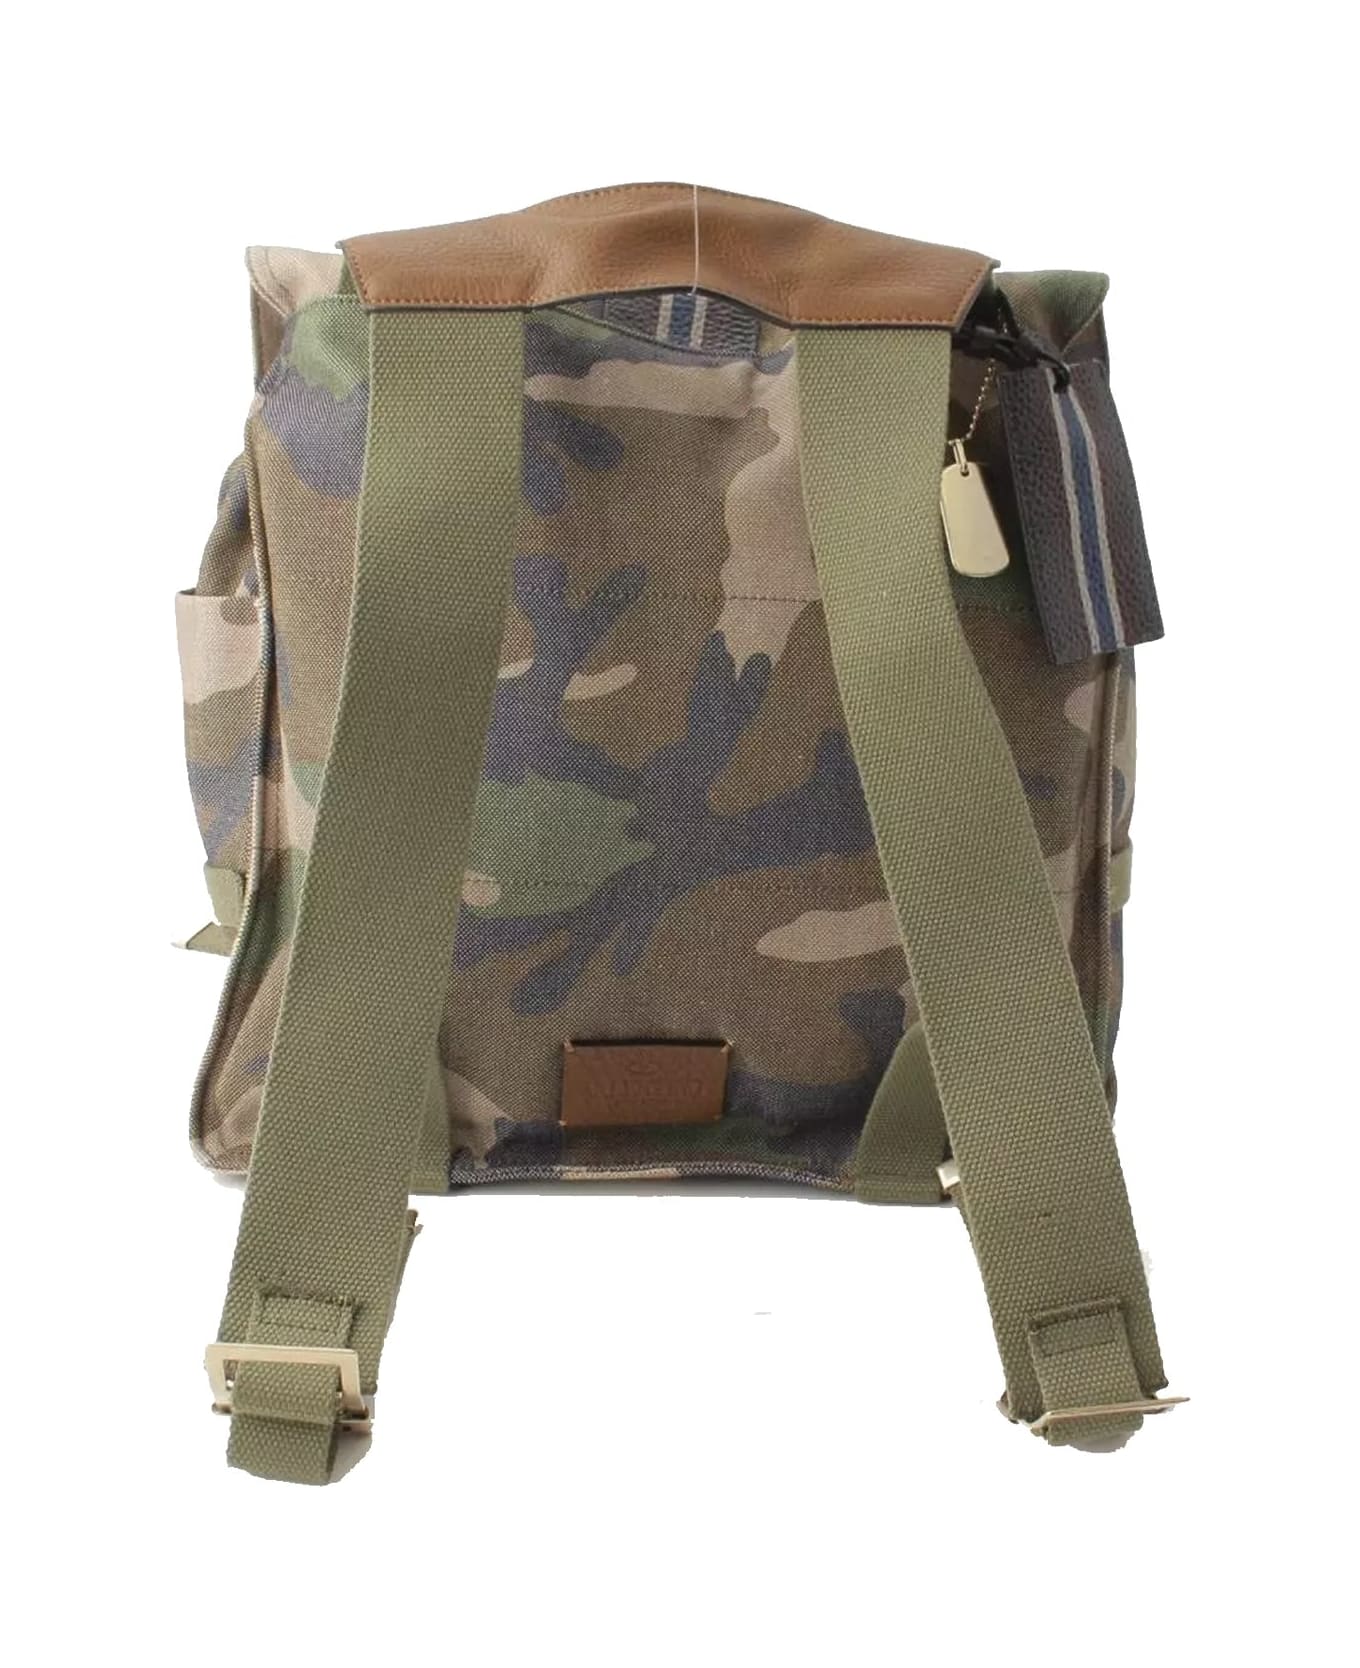 Valentino Garavani Military Canvas Backpack - Green